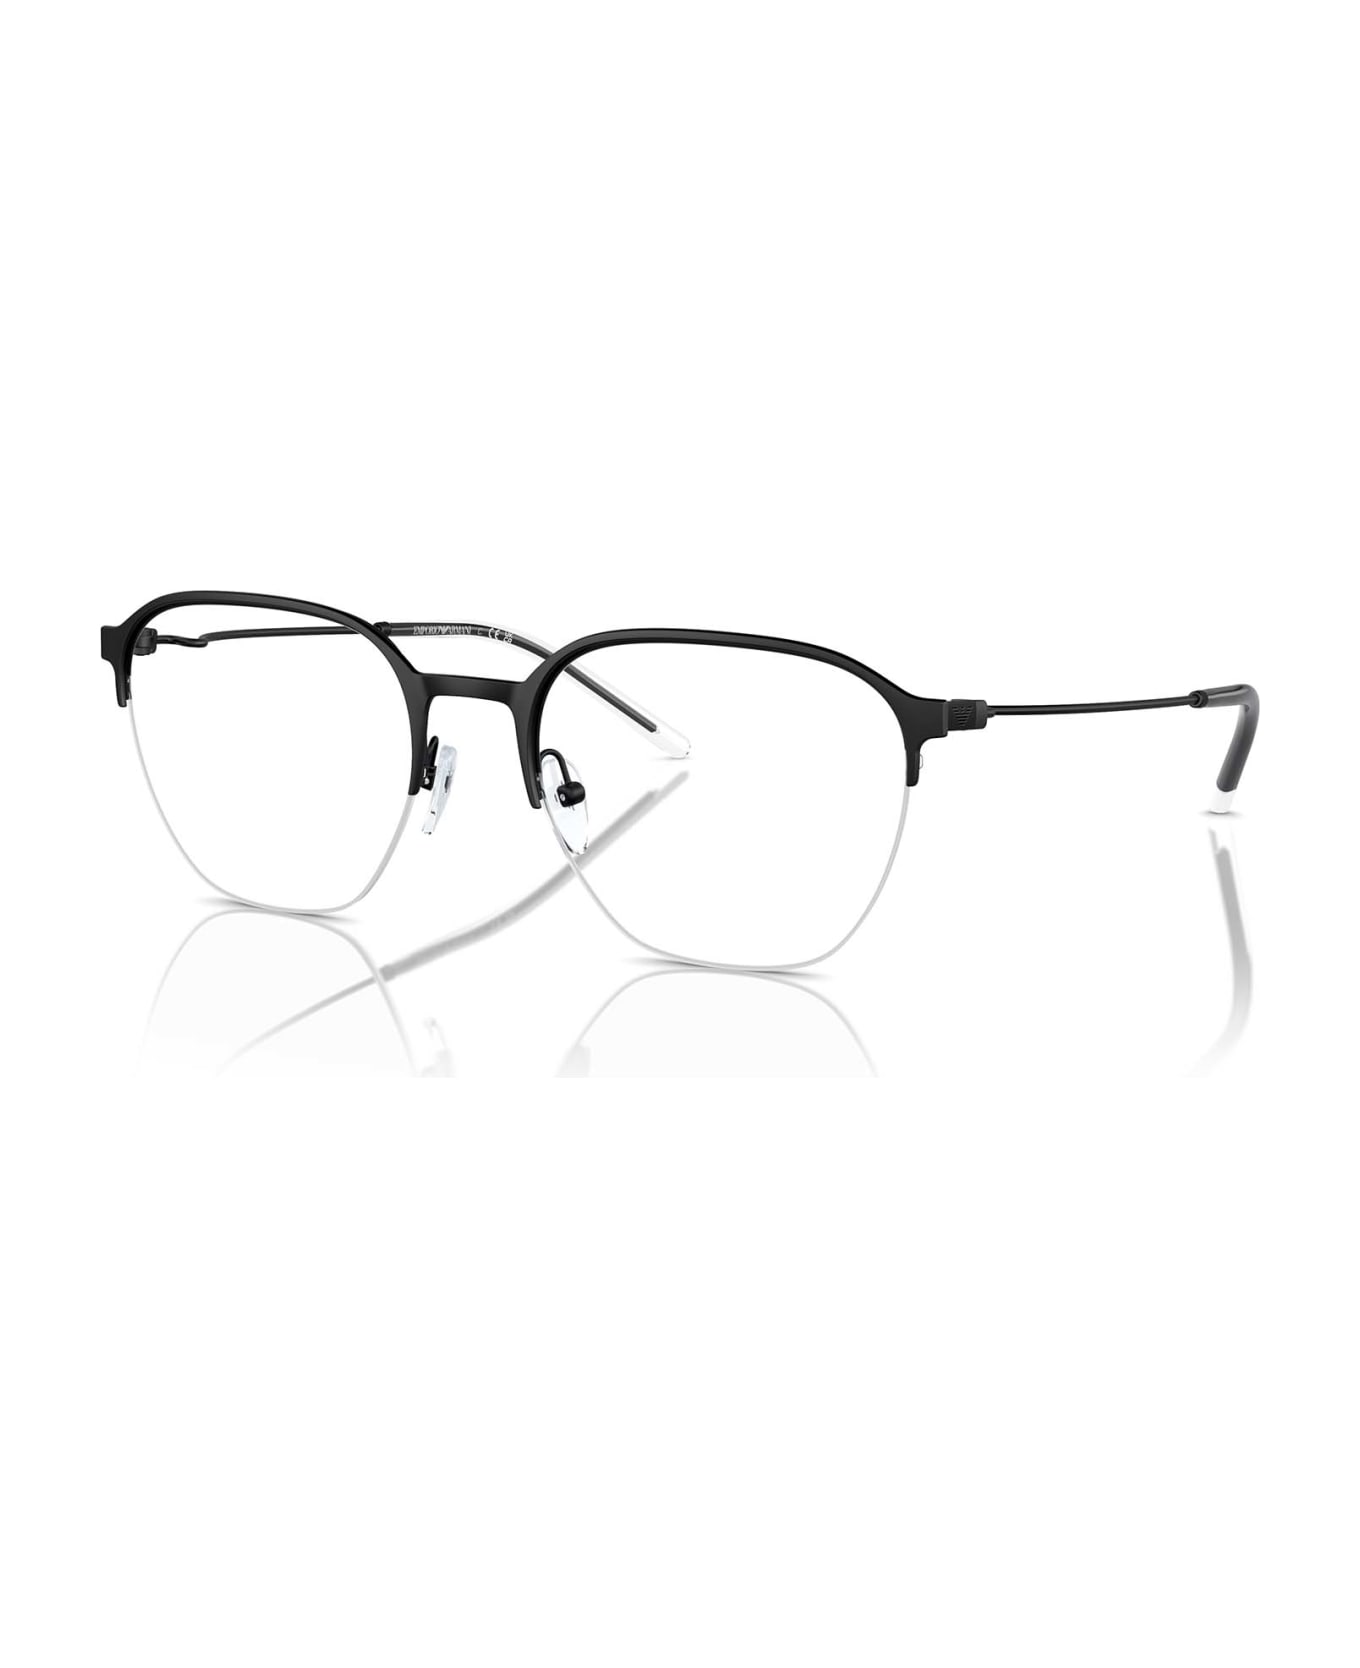 Emporio Armani Ea1160 Matte Black Glasses - Matte Black アイウェア